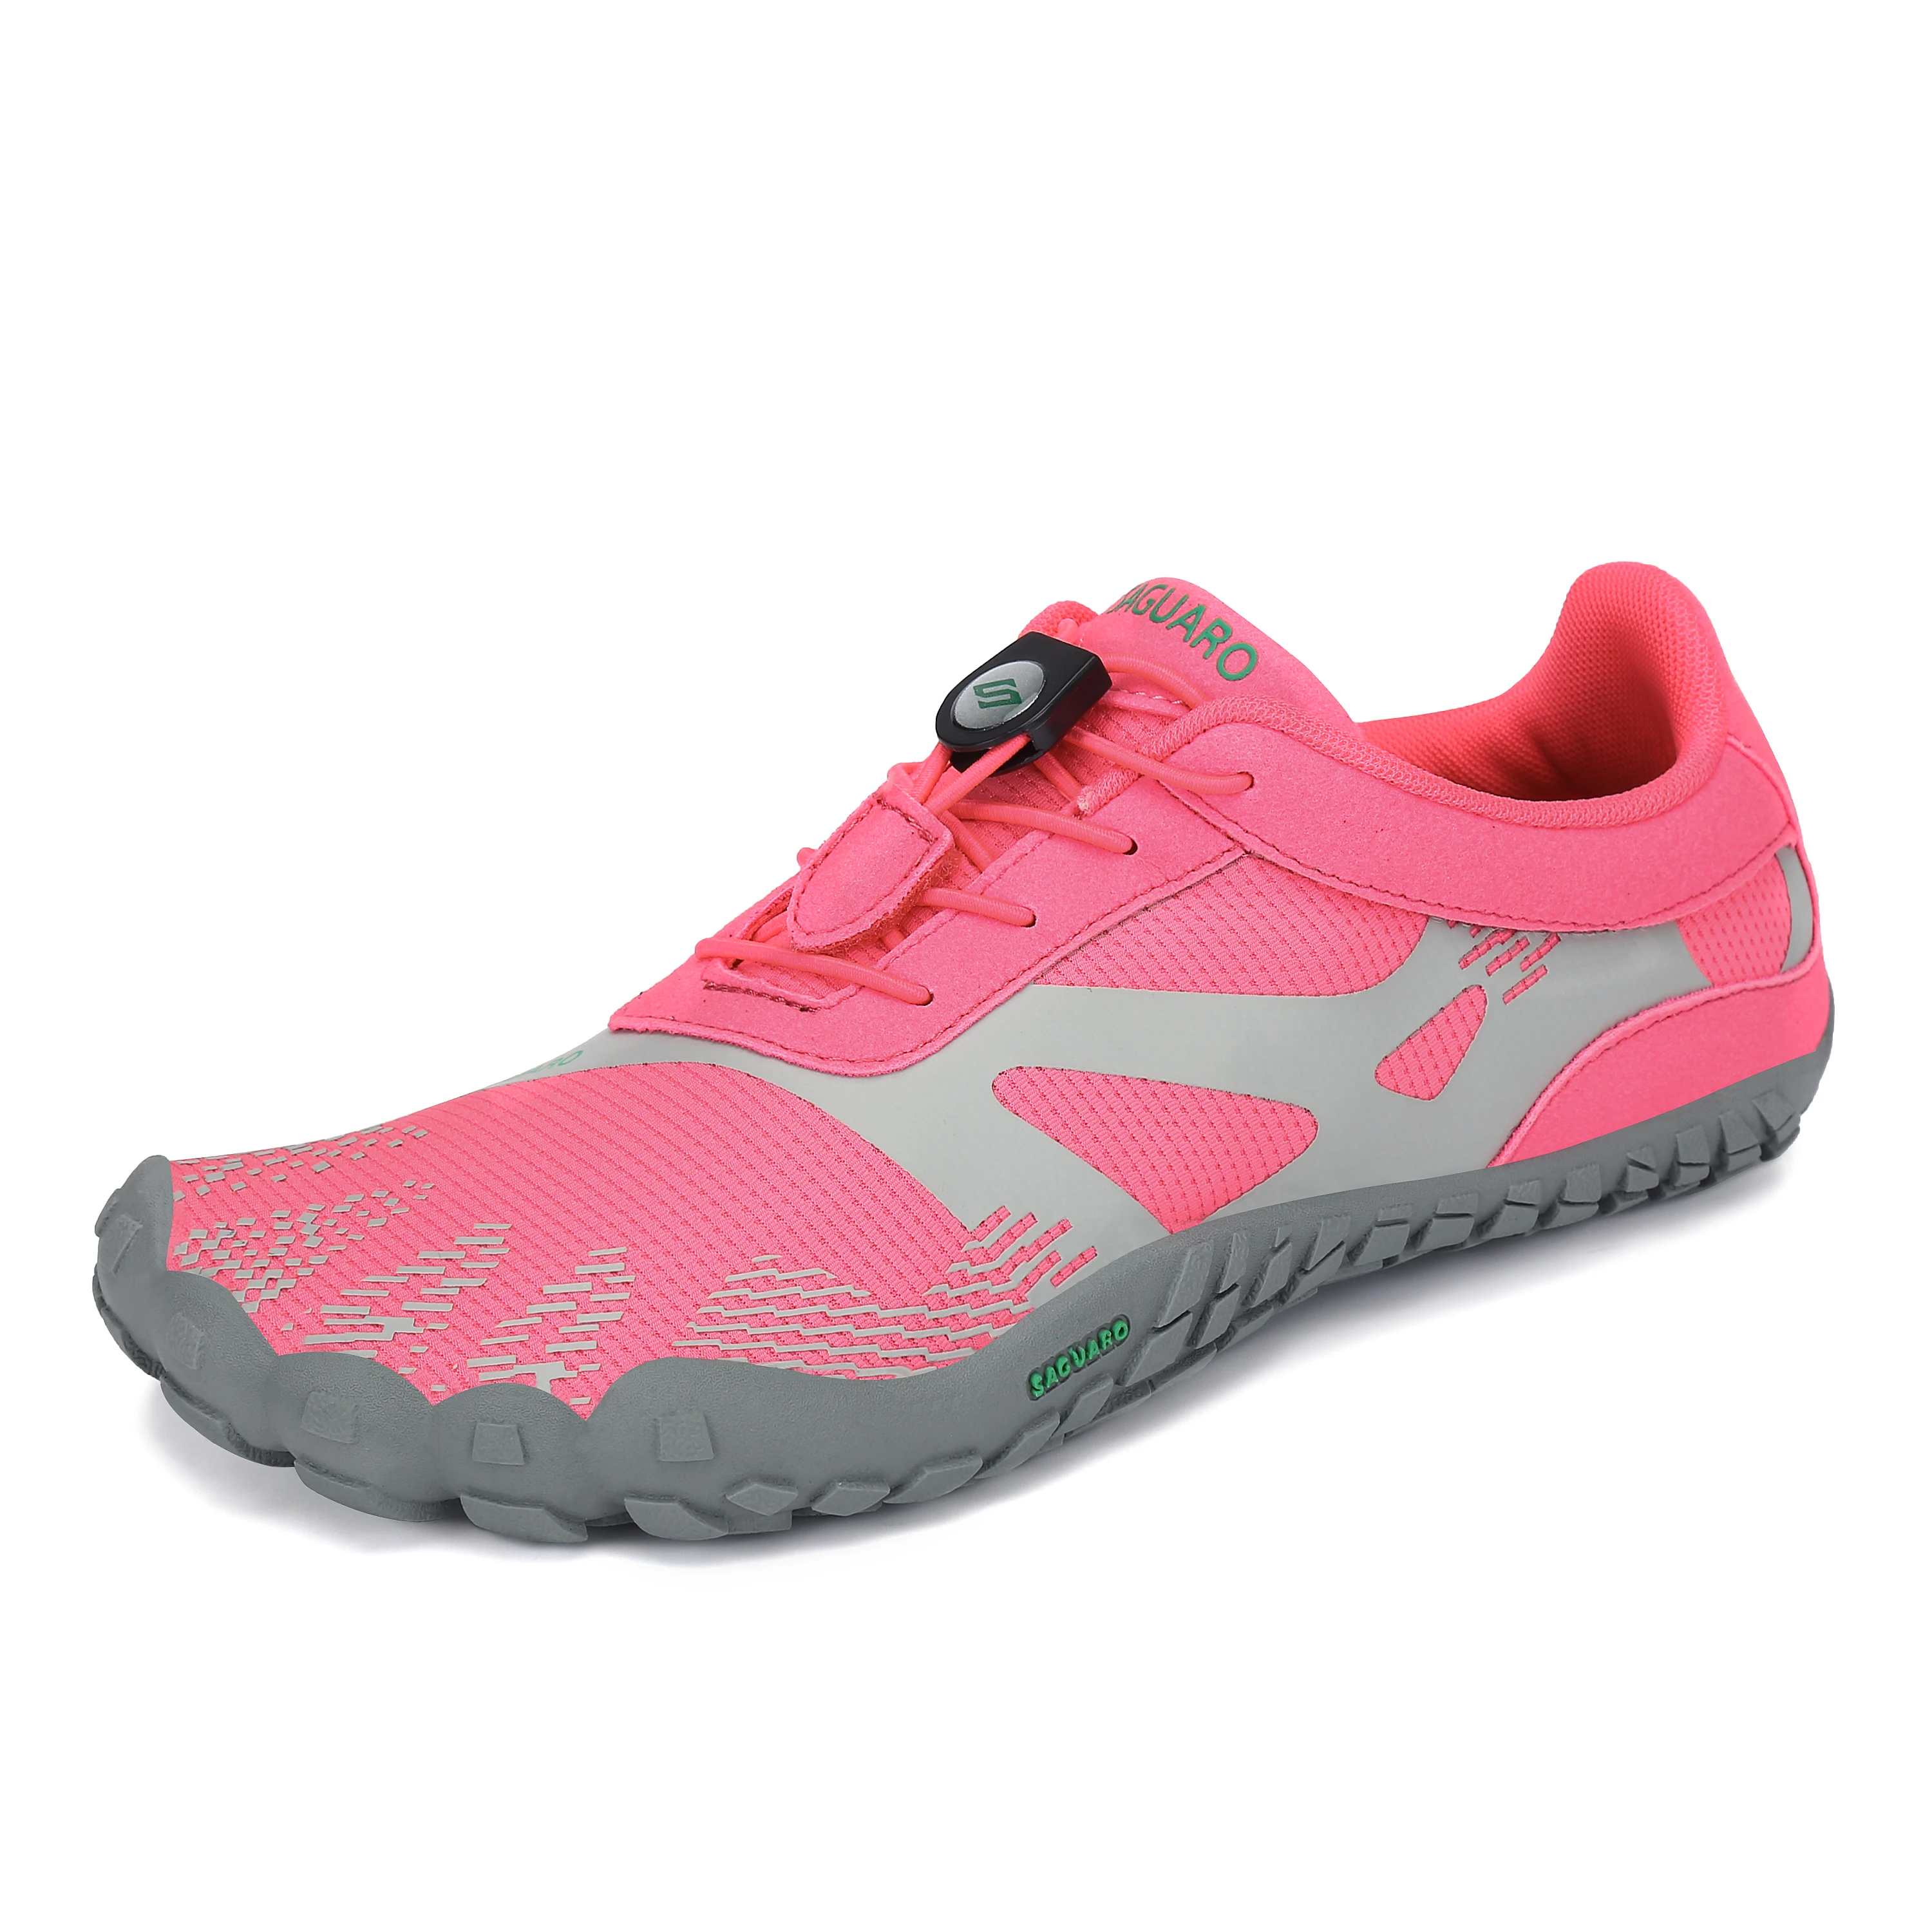 Saguaro Hommes Femmes Barefoot Chaussures De Sport Running Marche Extérieur Respirant #B008 